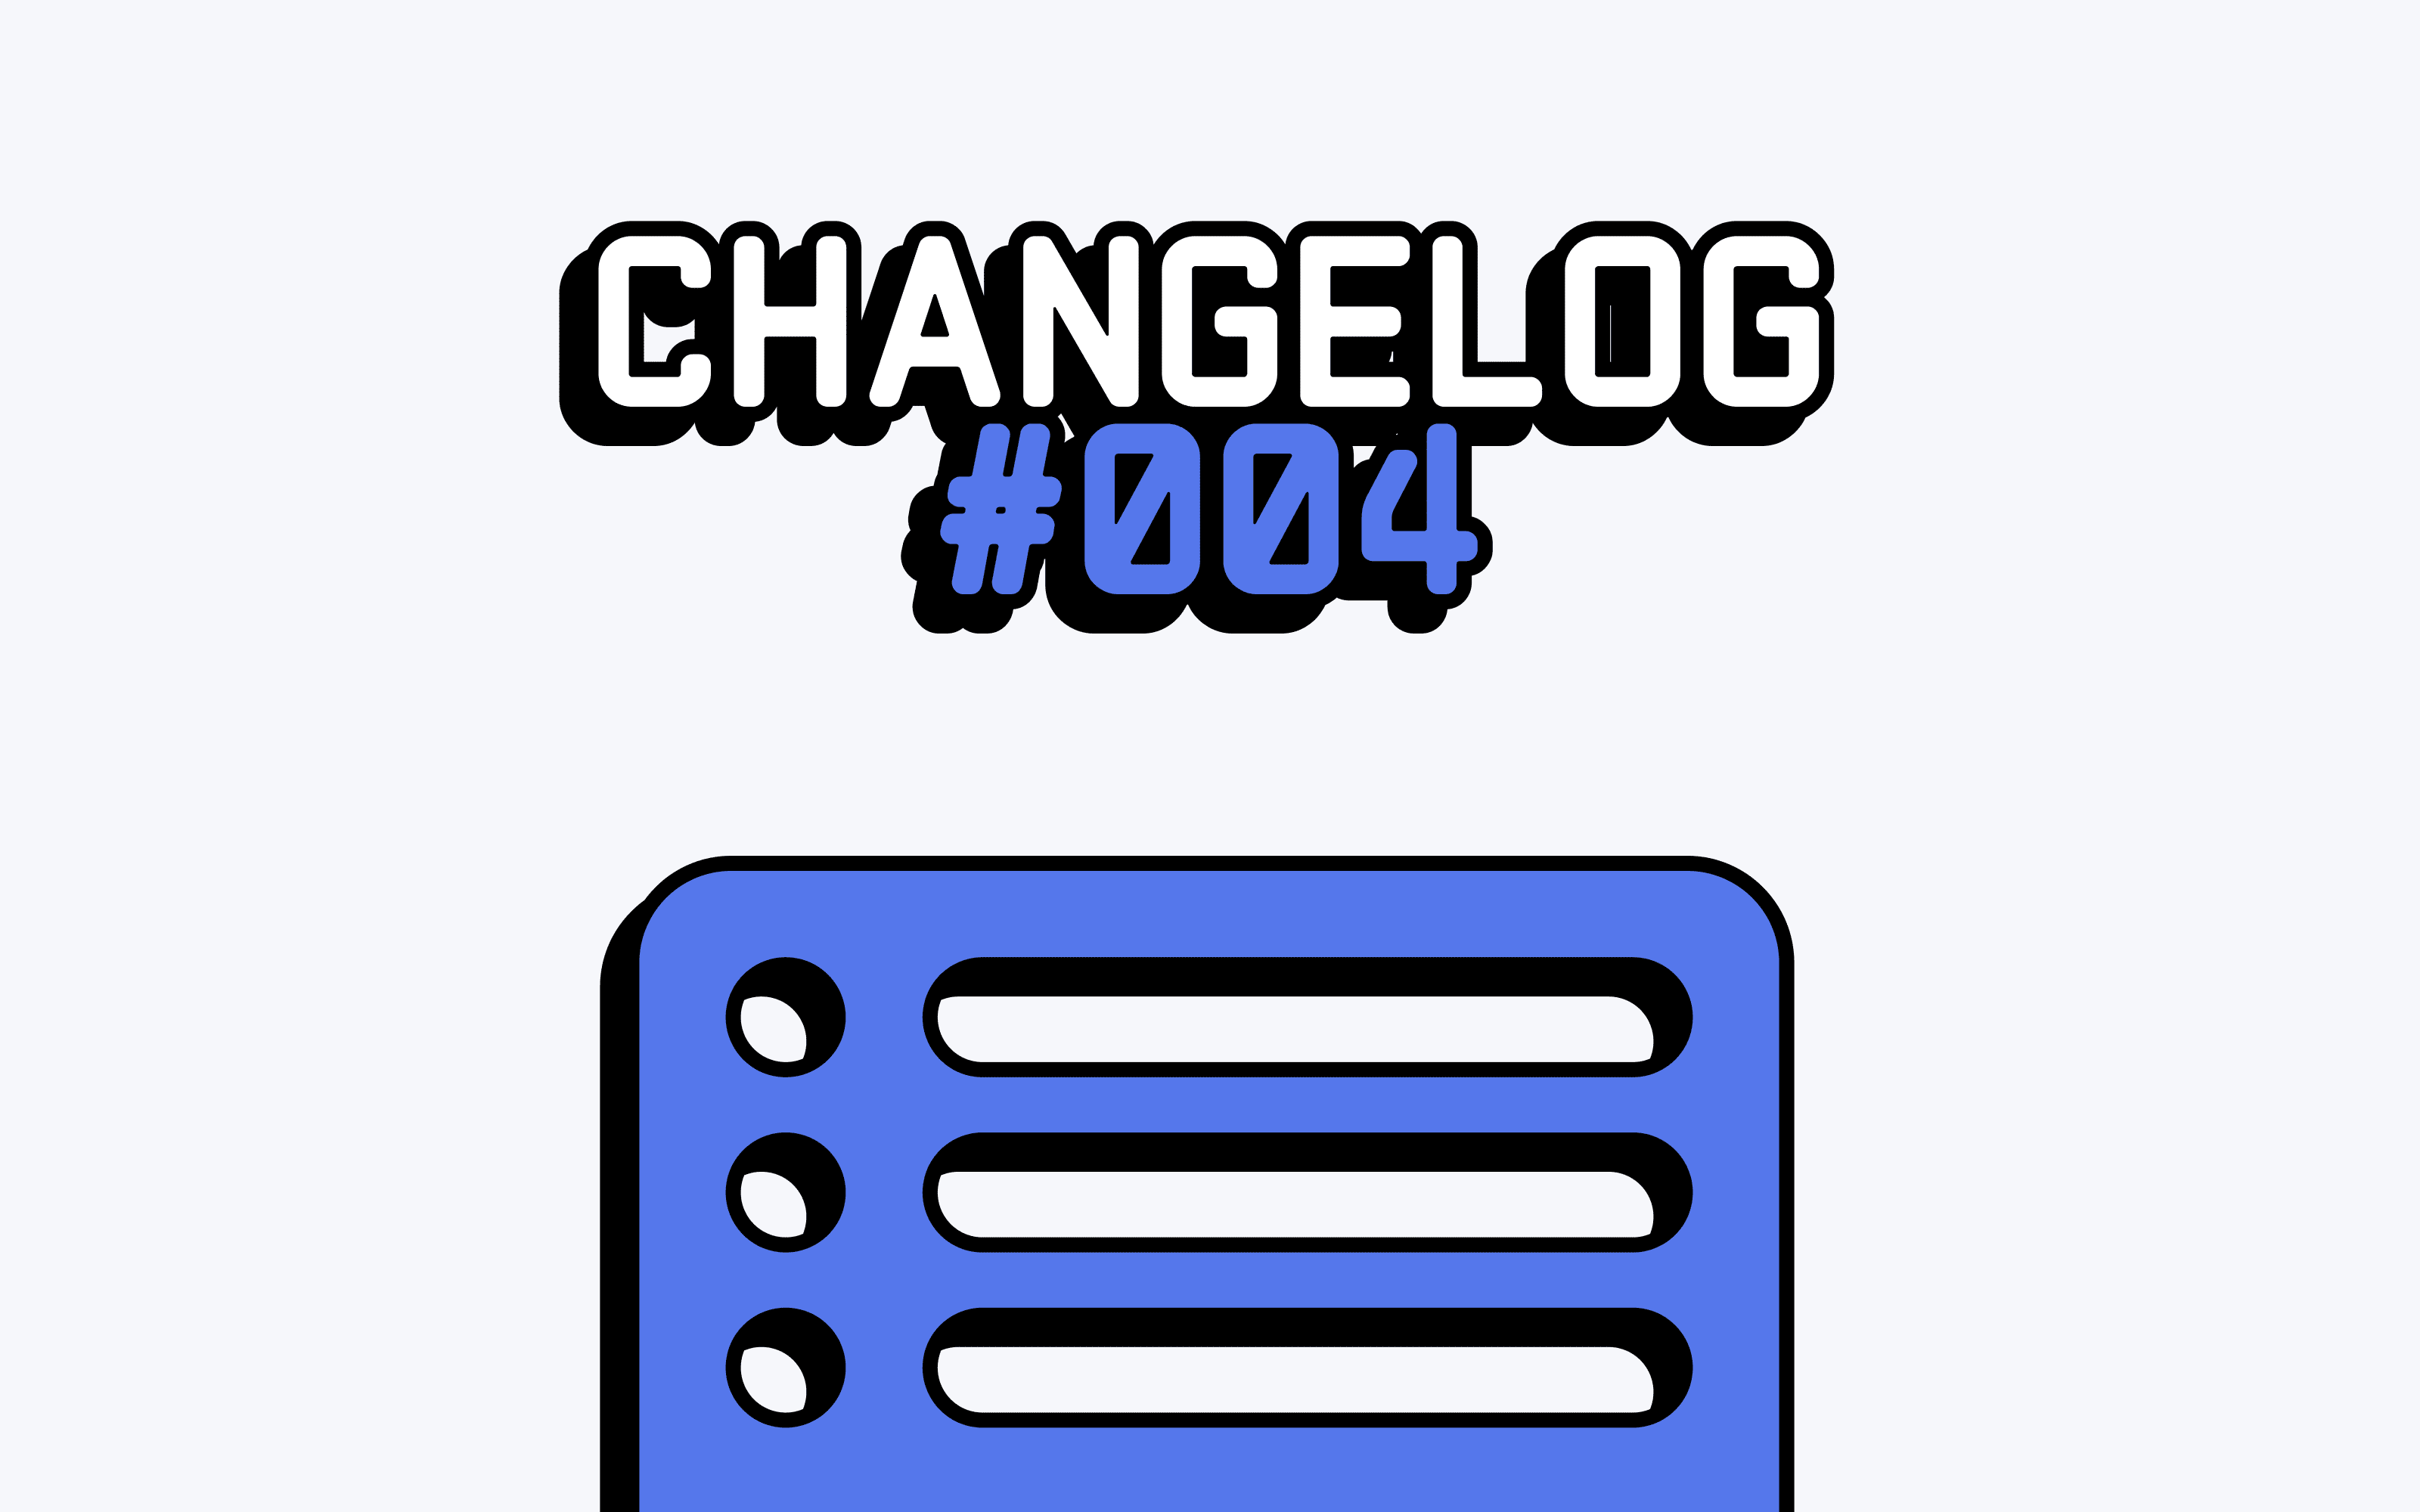 Changelog #004